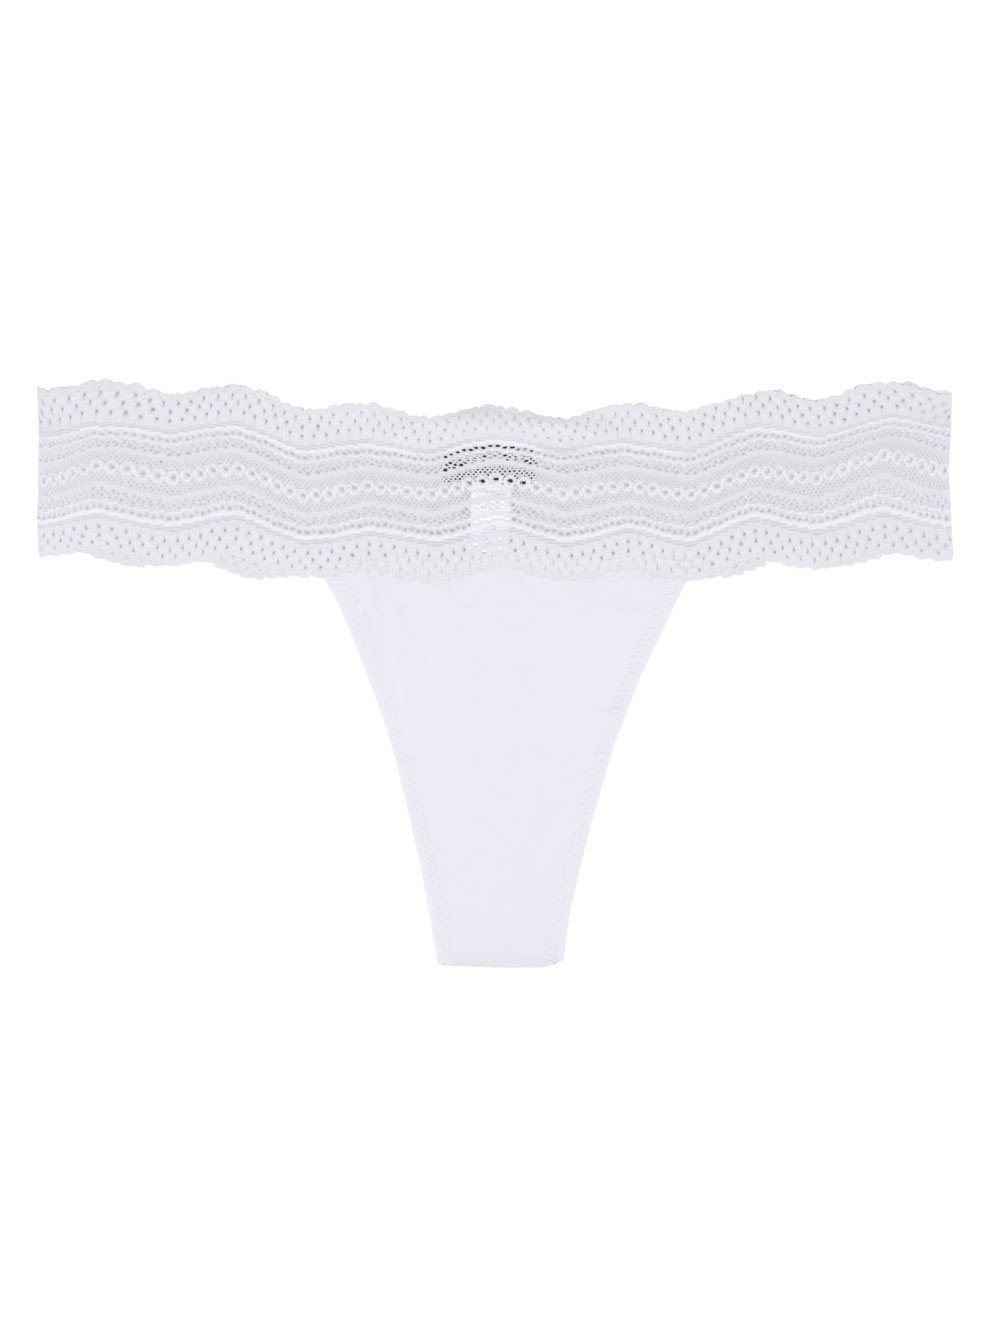 Cosabella THONGS O/S / WHITE Cosabella Stretch Lace Waist Cotton Thong Panties